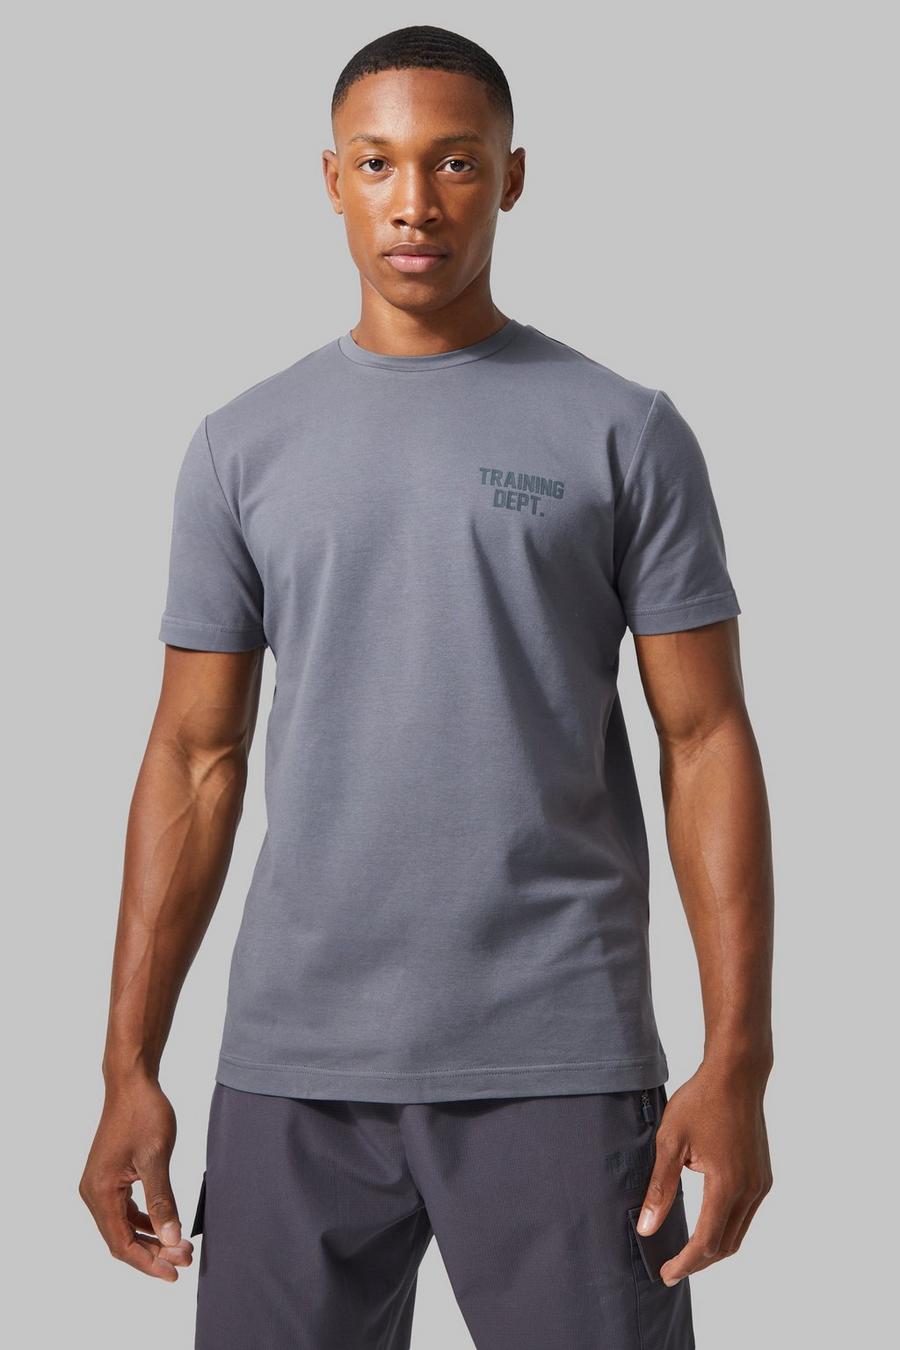 Charcoal Active Training Dept Performance Slim T-shirt image number 1